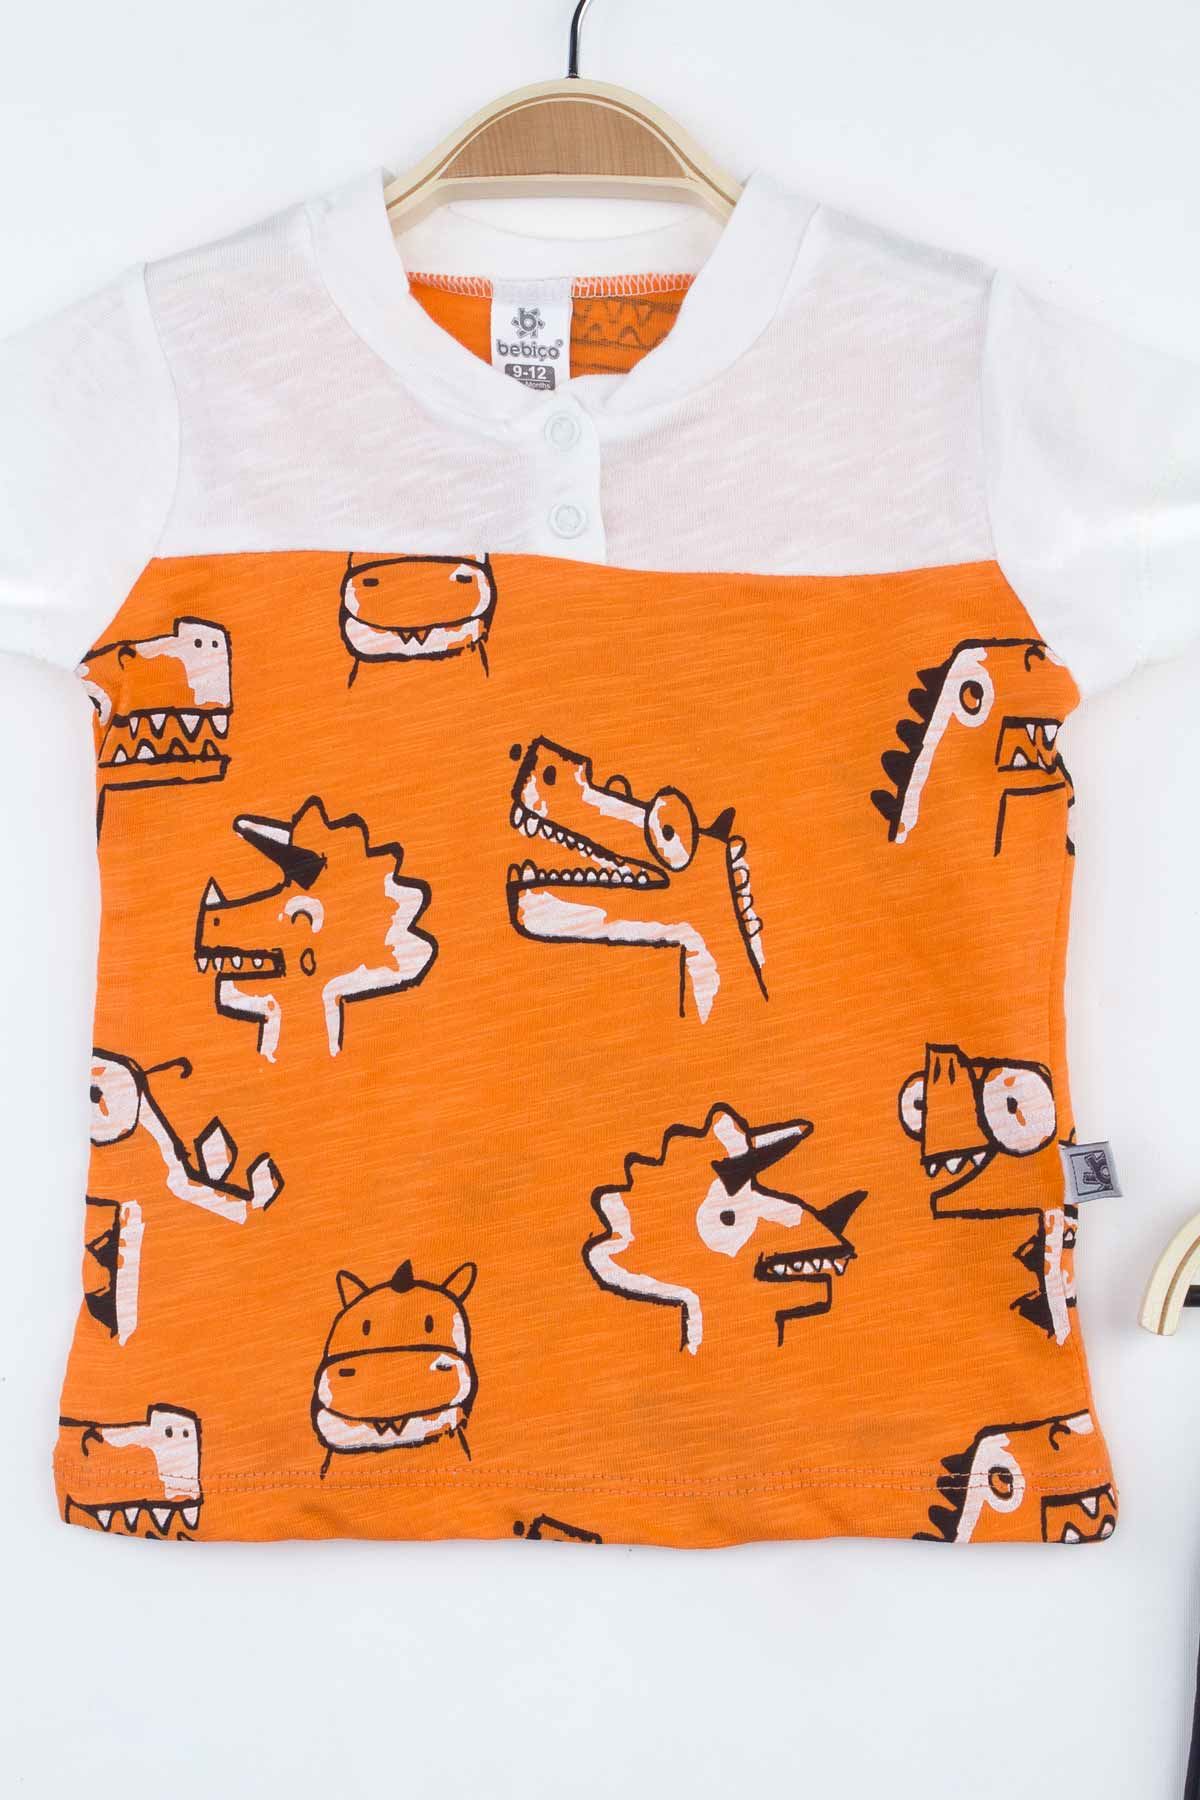 Orange Baby Boy Shorts Set Summer 2021 Fashion Babies Boys Outfit Cotton Casual Vacation Use Clothing Models